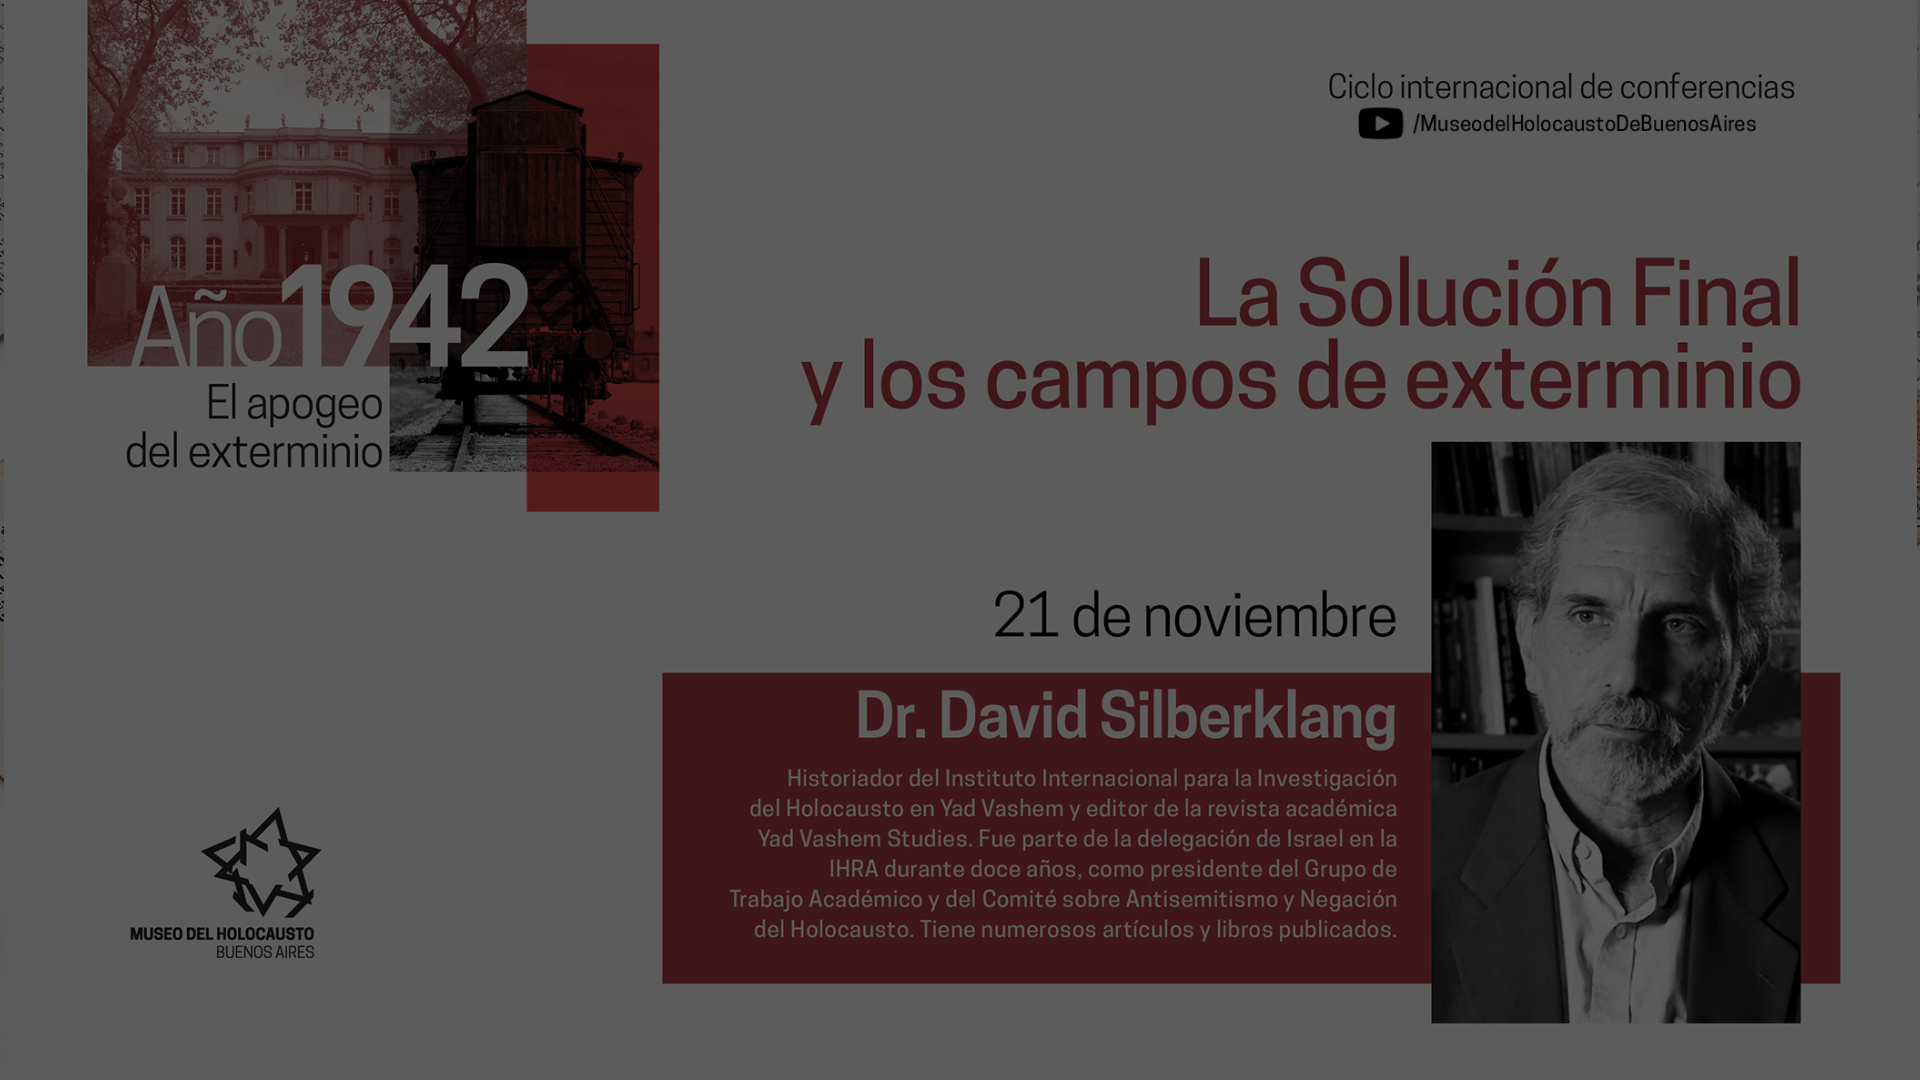 VIDEO 3 | Año 1942 | Dr. David Silberklang | 